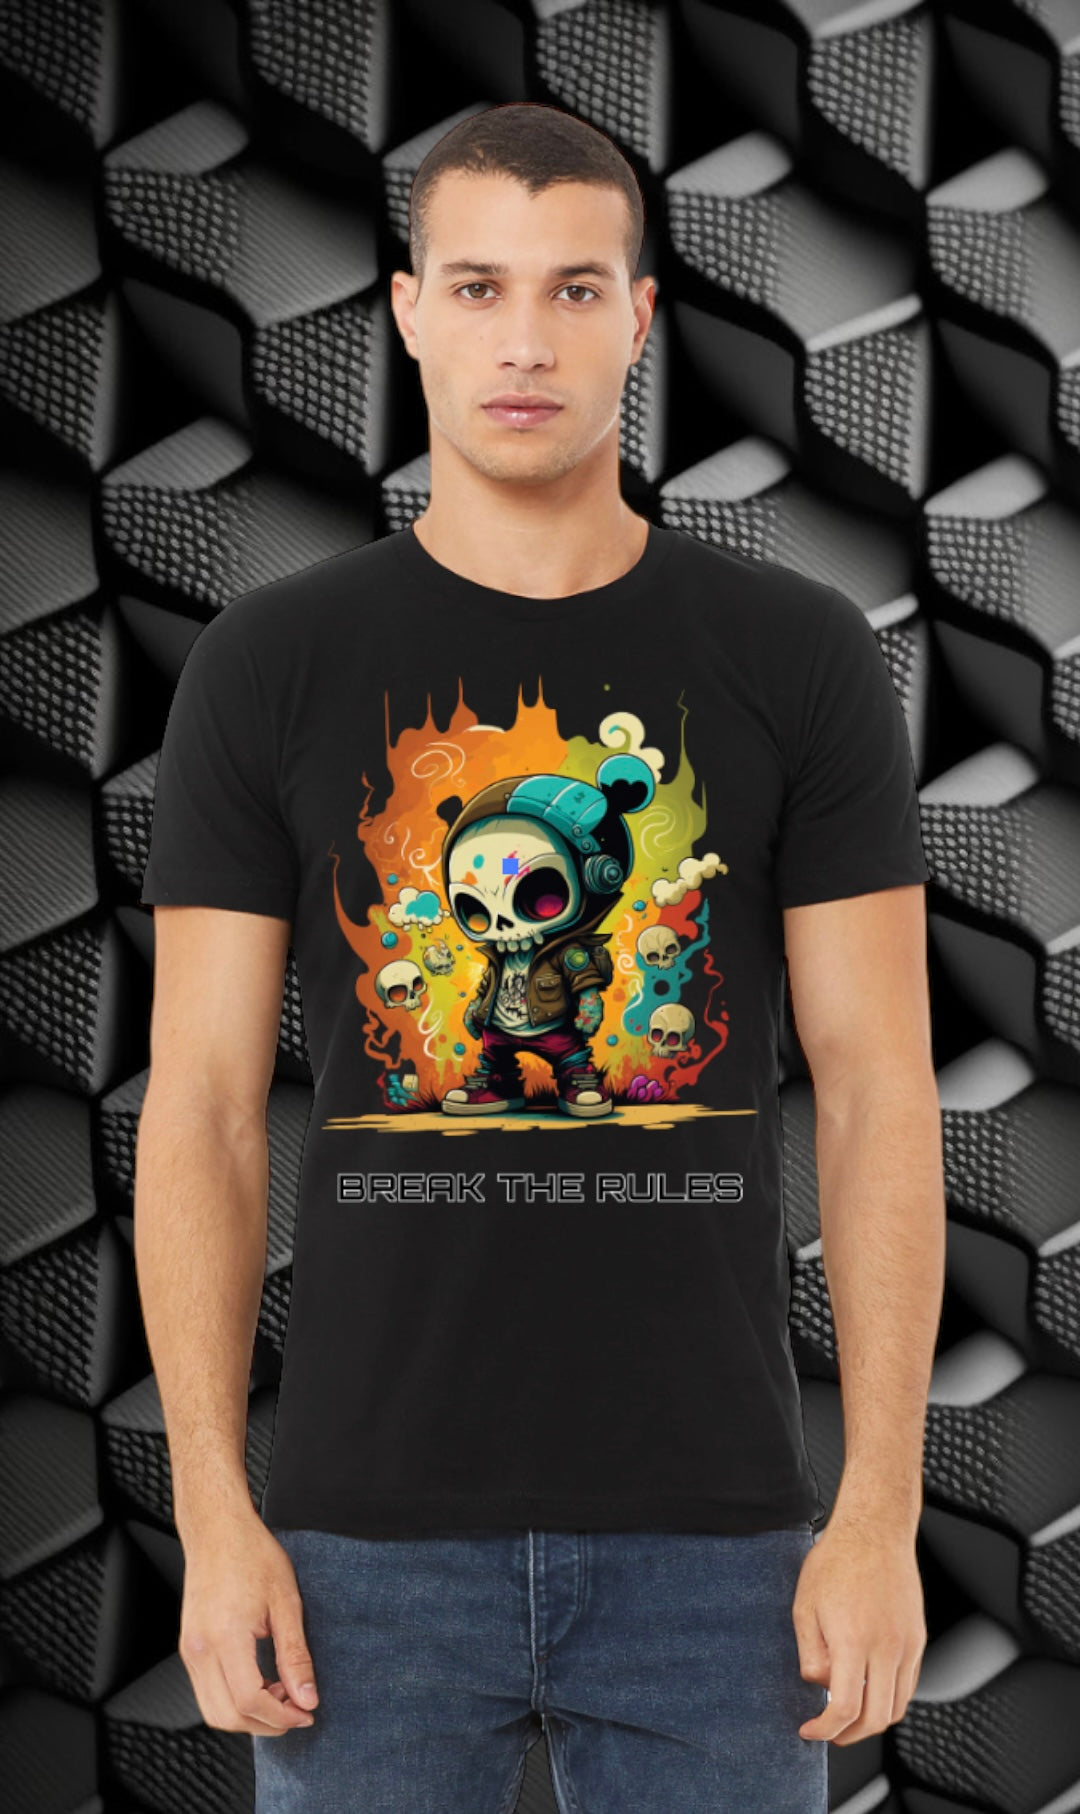 Skull T Shirts Break the Rules DTG Full color Edition